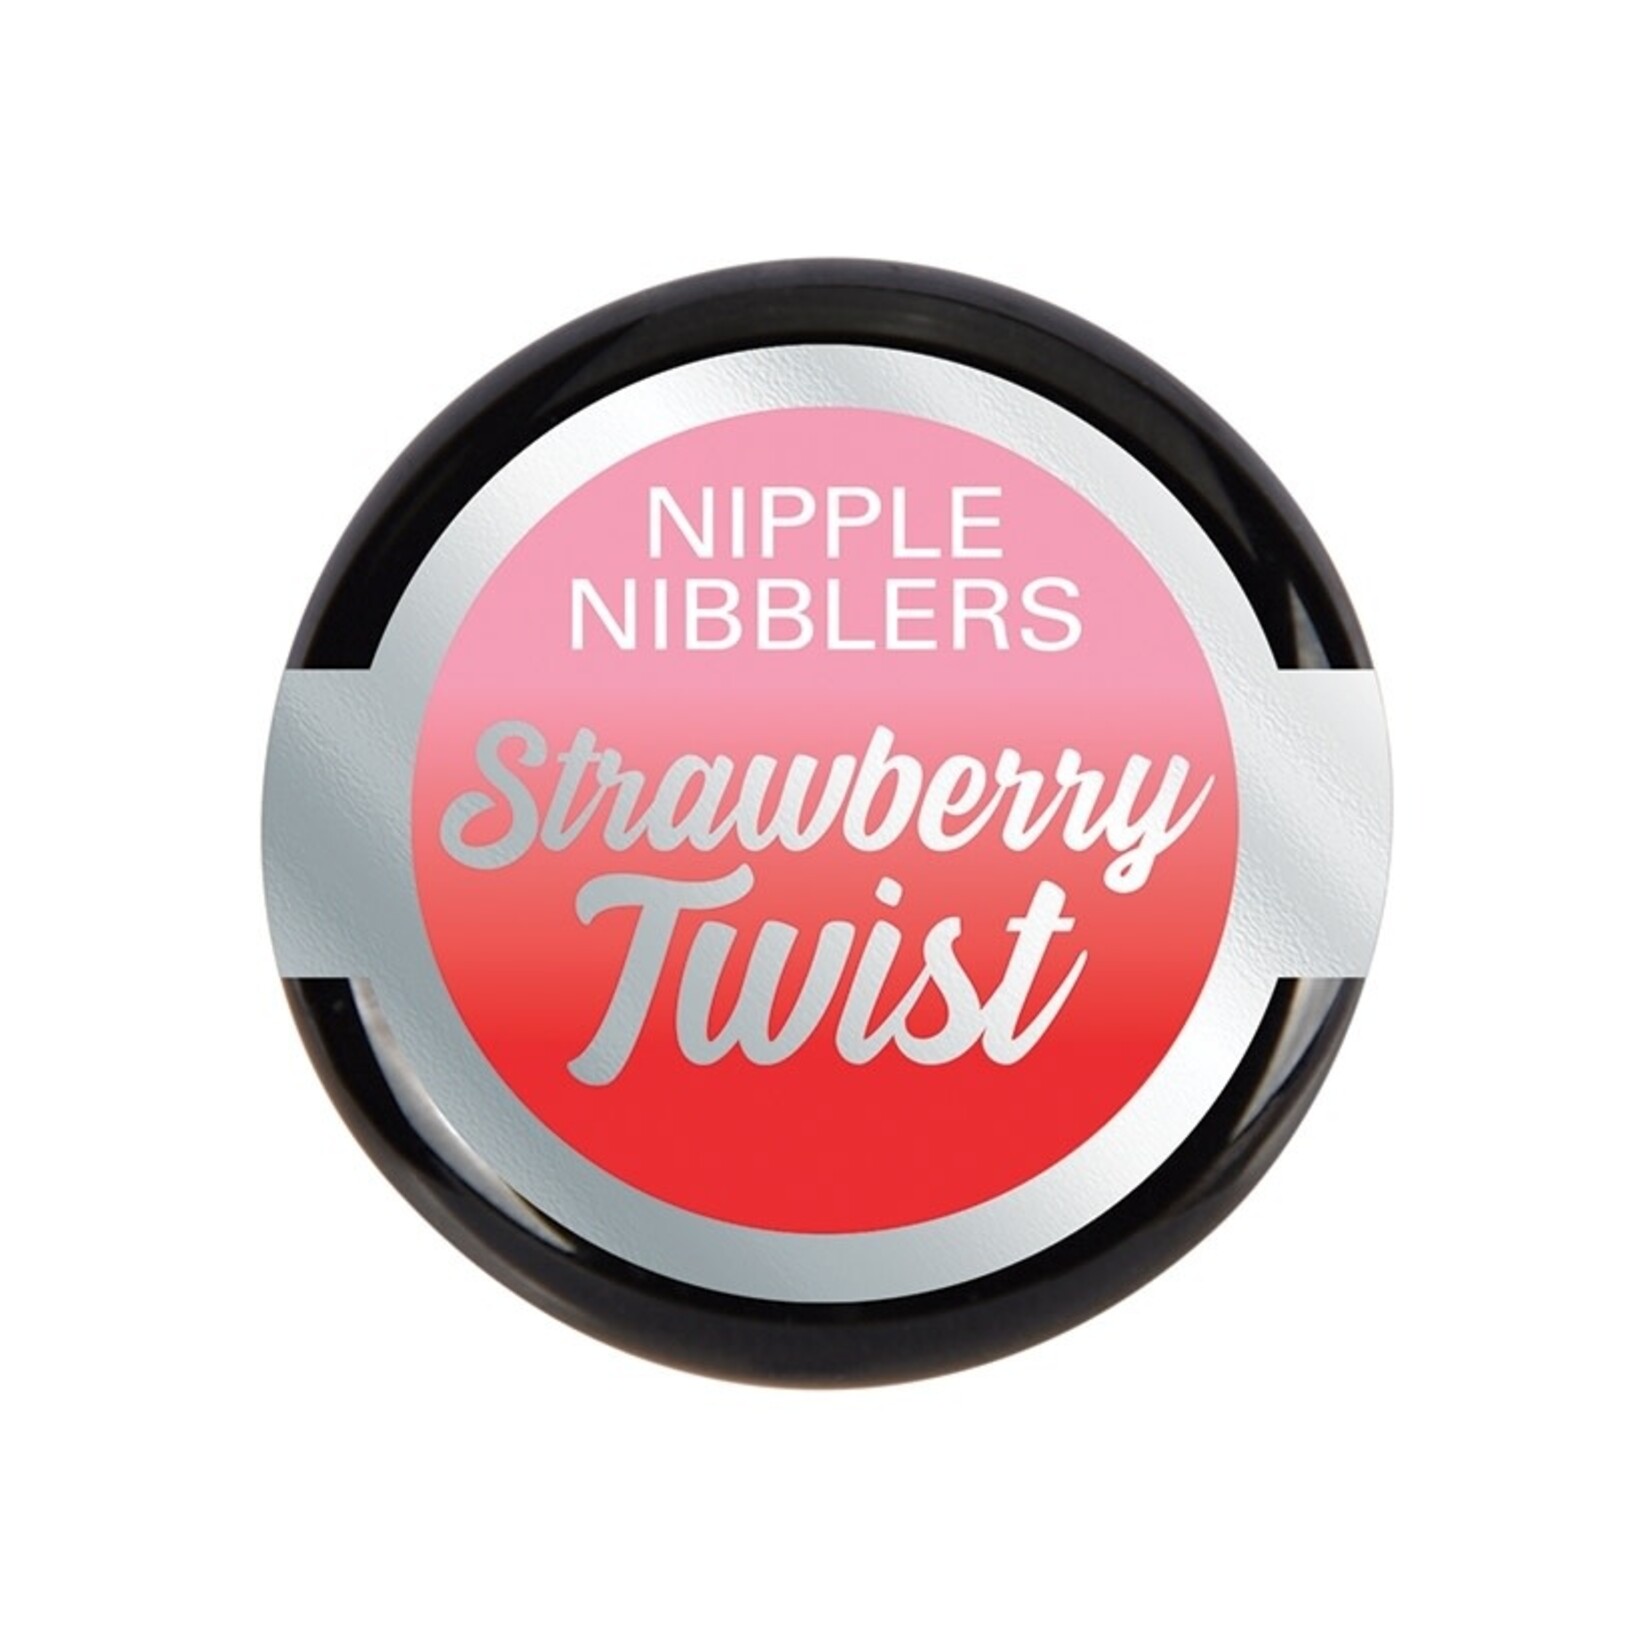 NIPPLE NIBBLERS TINGLE BALM 3G - STRAWBERRY TWIST